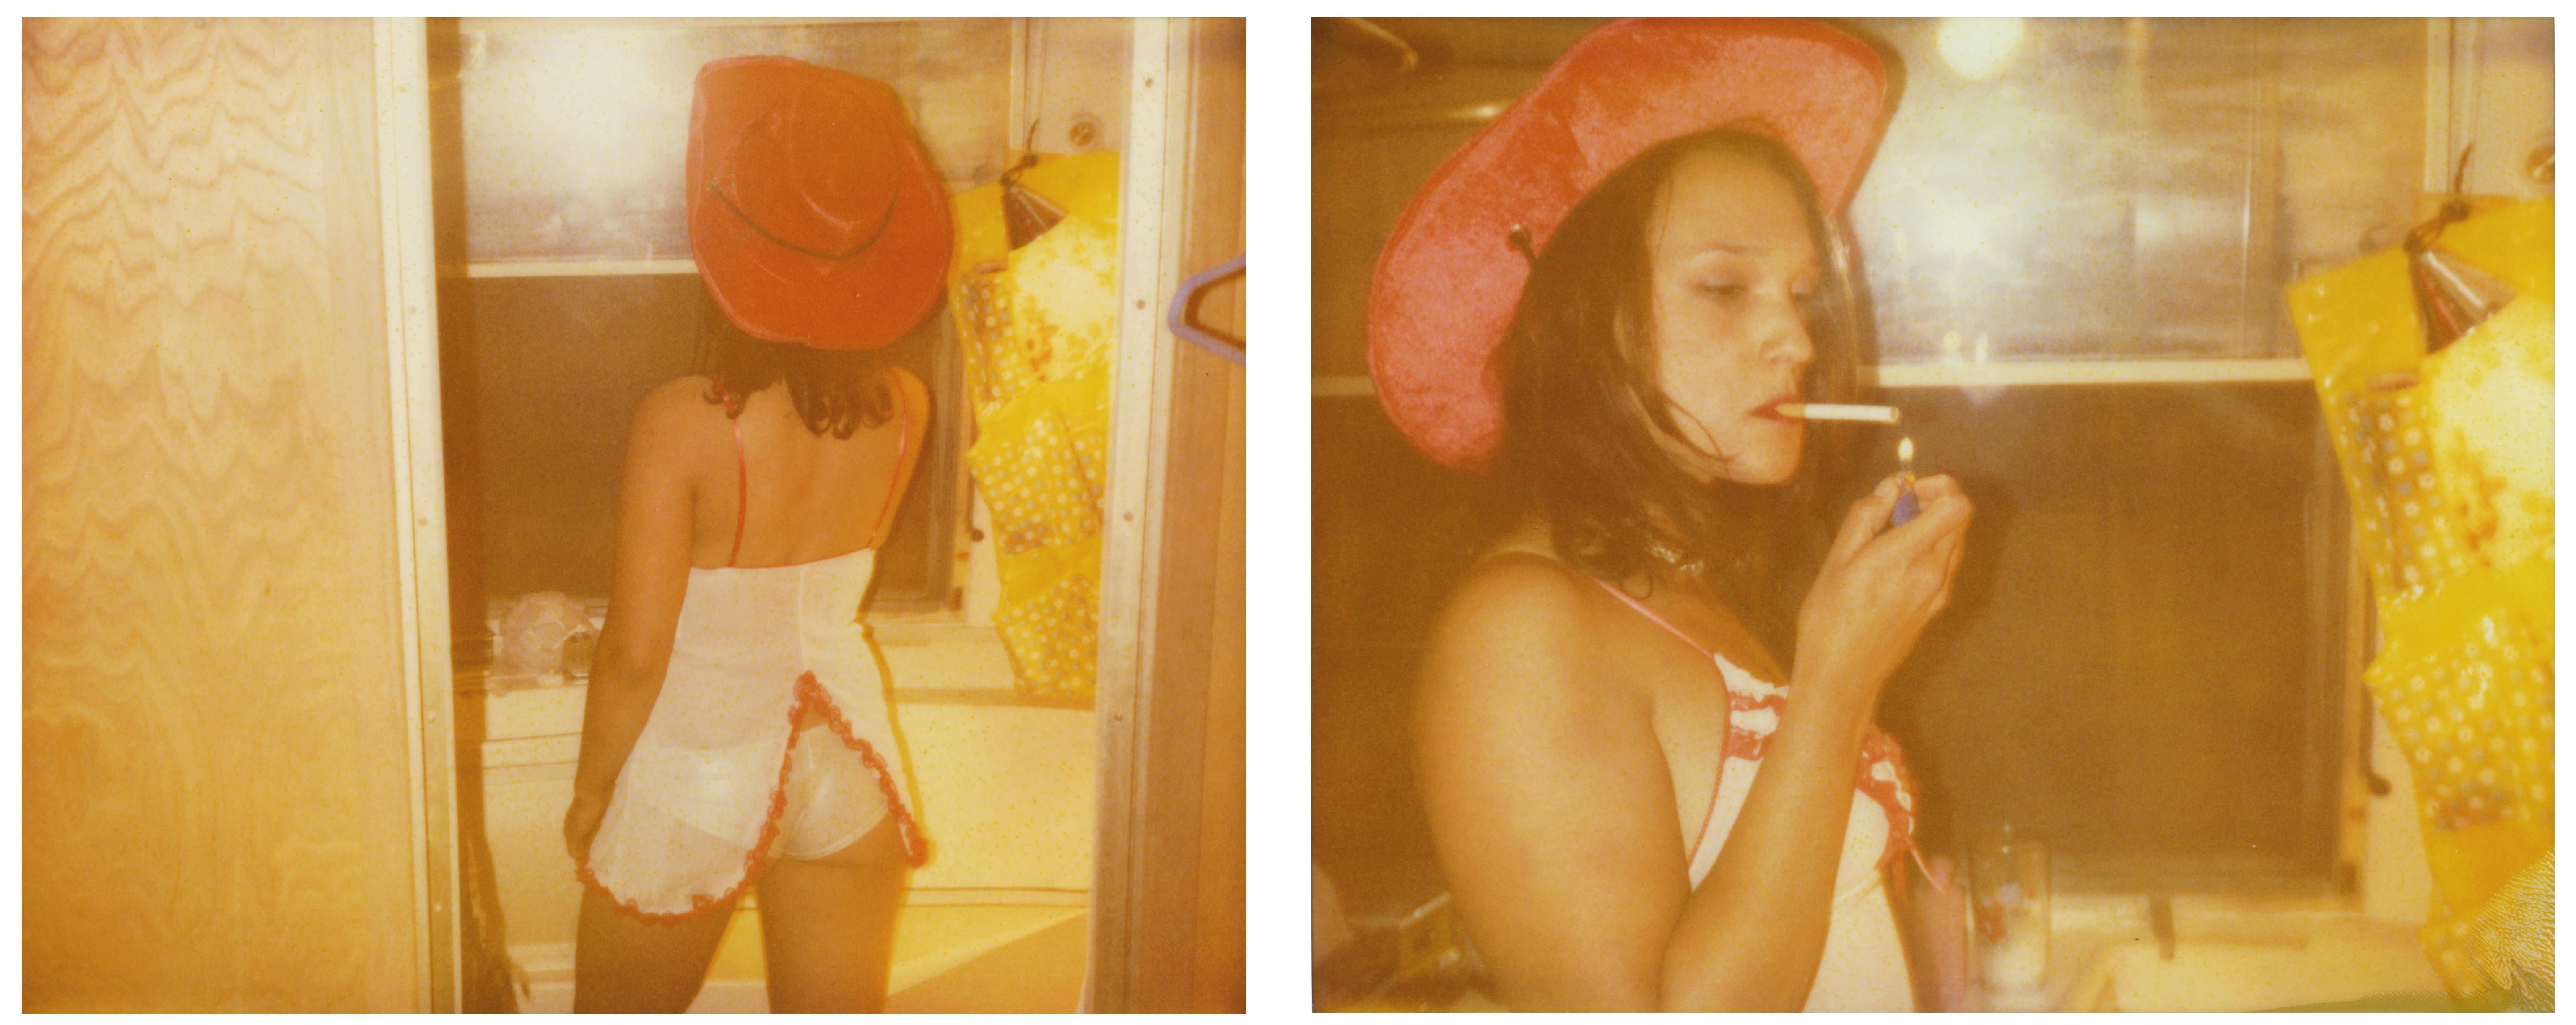 Stefanie Schneider Color Photograph - 'Margarita smokes' from Till Death do us Part, diptych